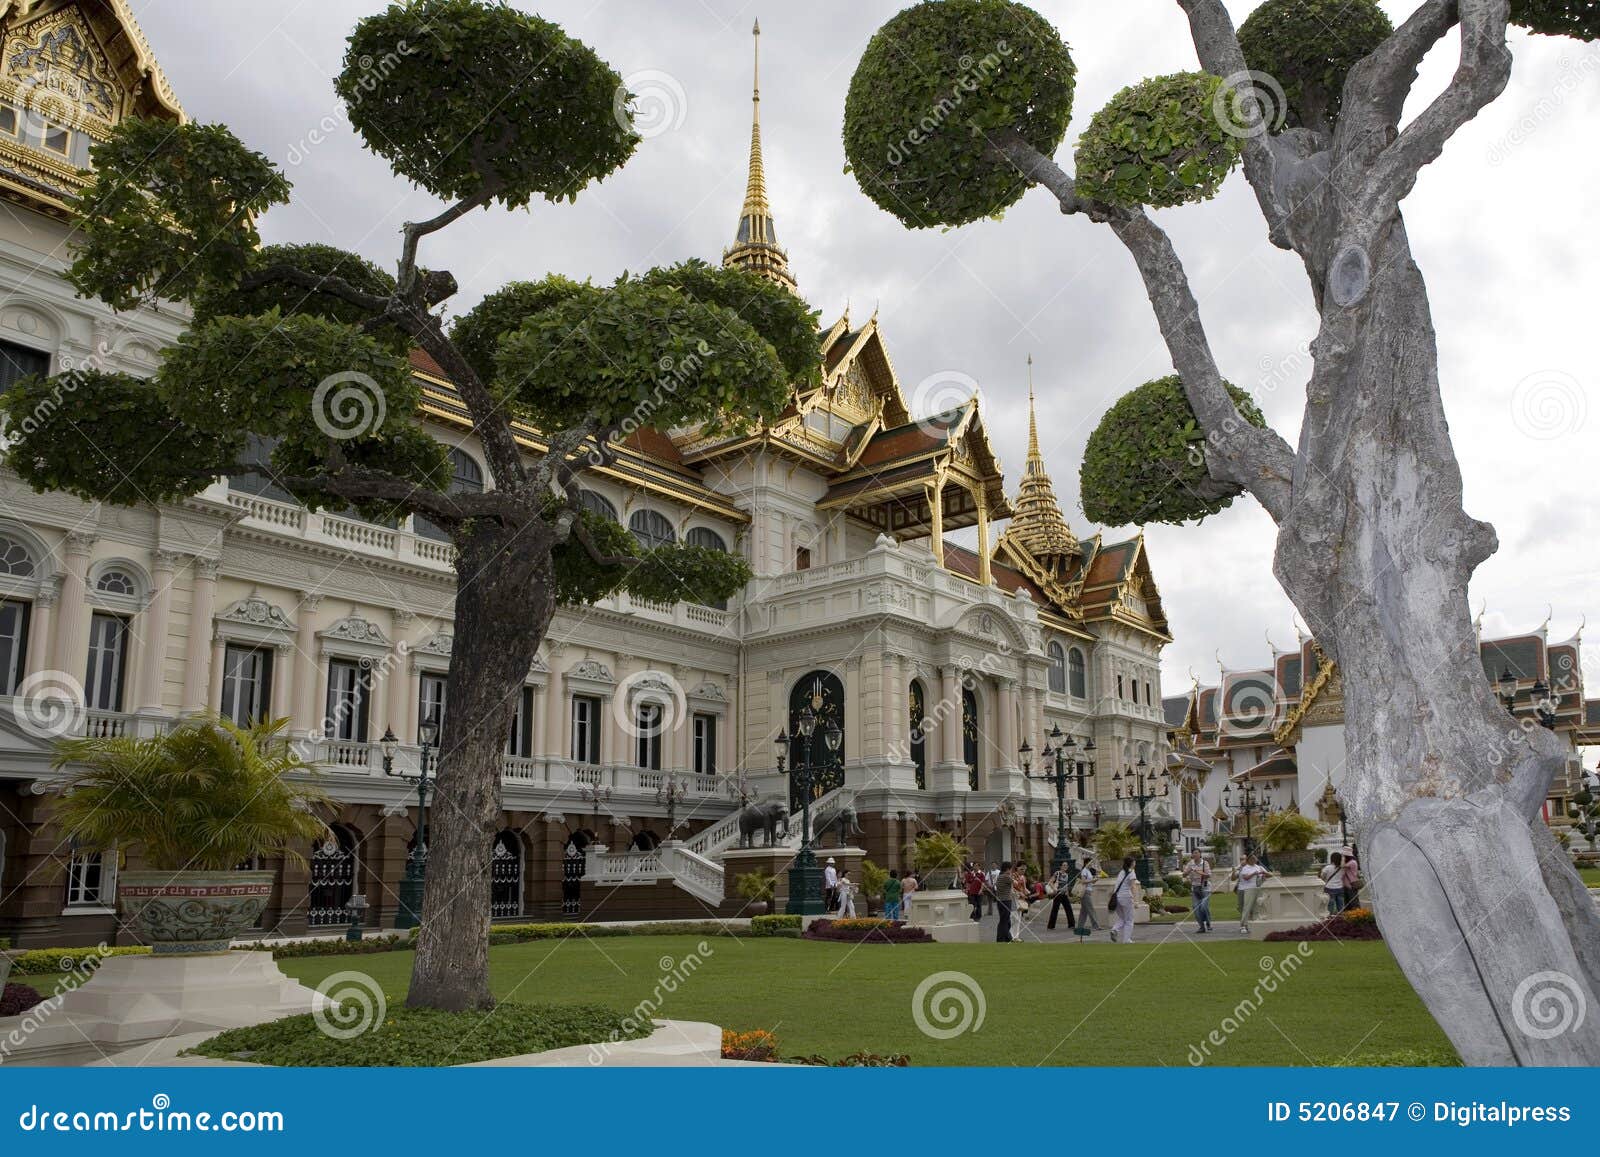 wat phra kaew, the royal palace in bangkok